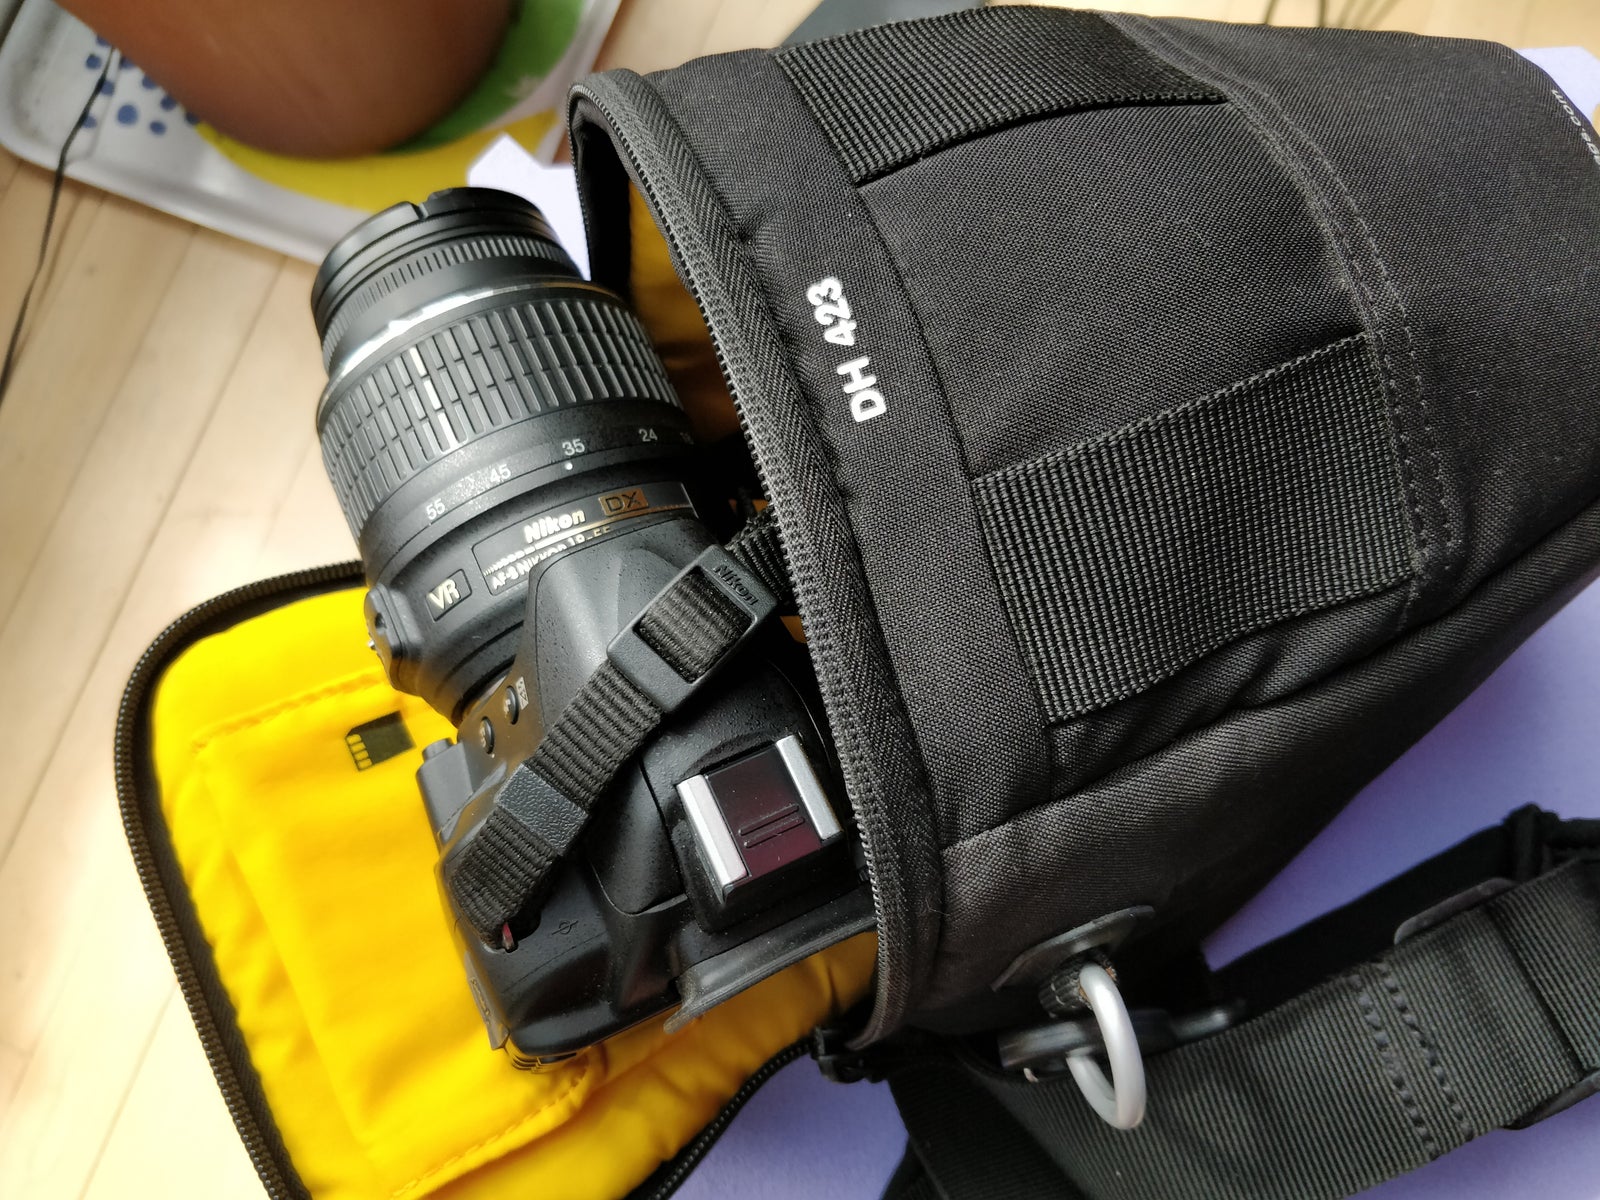 Nikon Nikon D3100 med Objektiv DX, spejlrefleks, 14.2